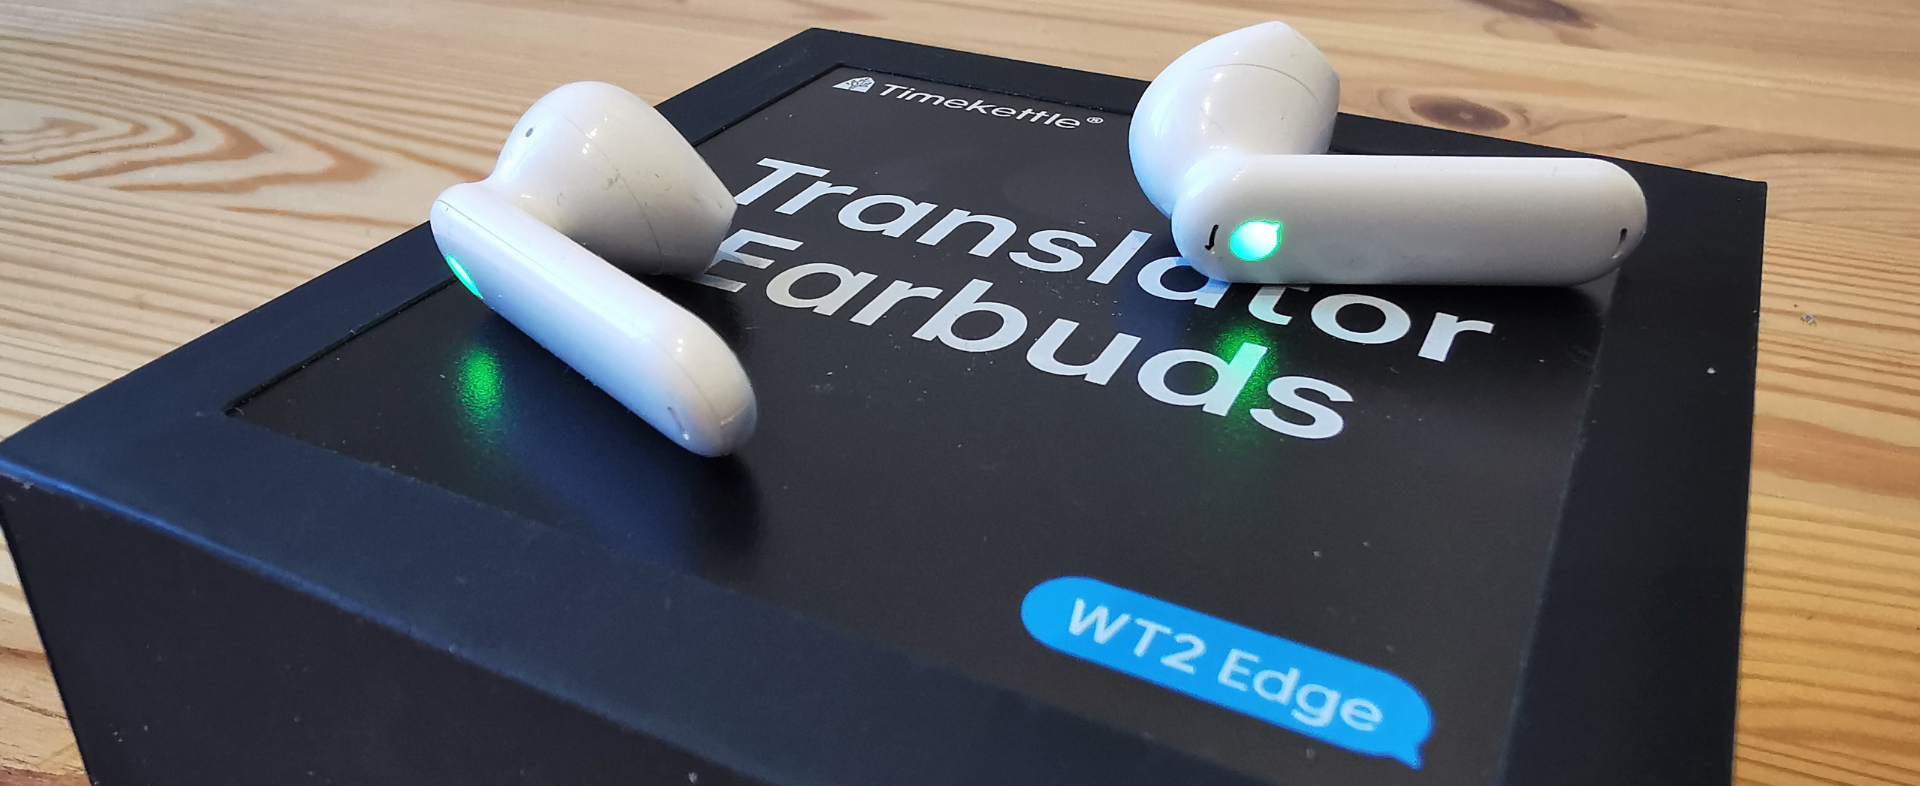 Timekettle WT2 Edge - Best Language Translator Earbuds